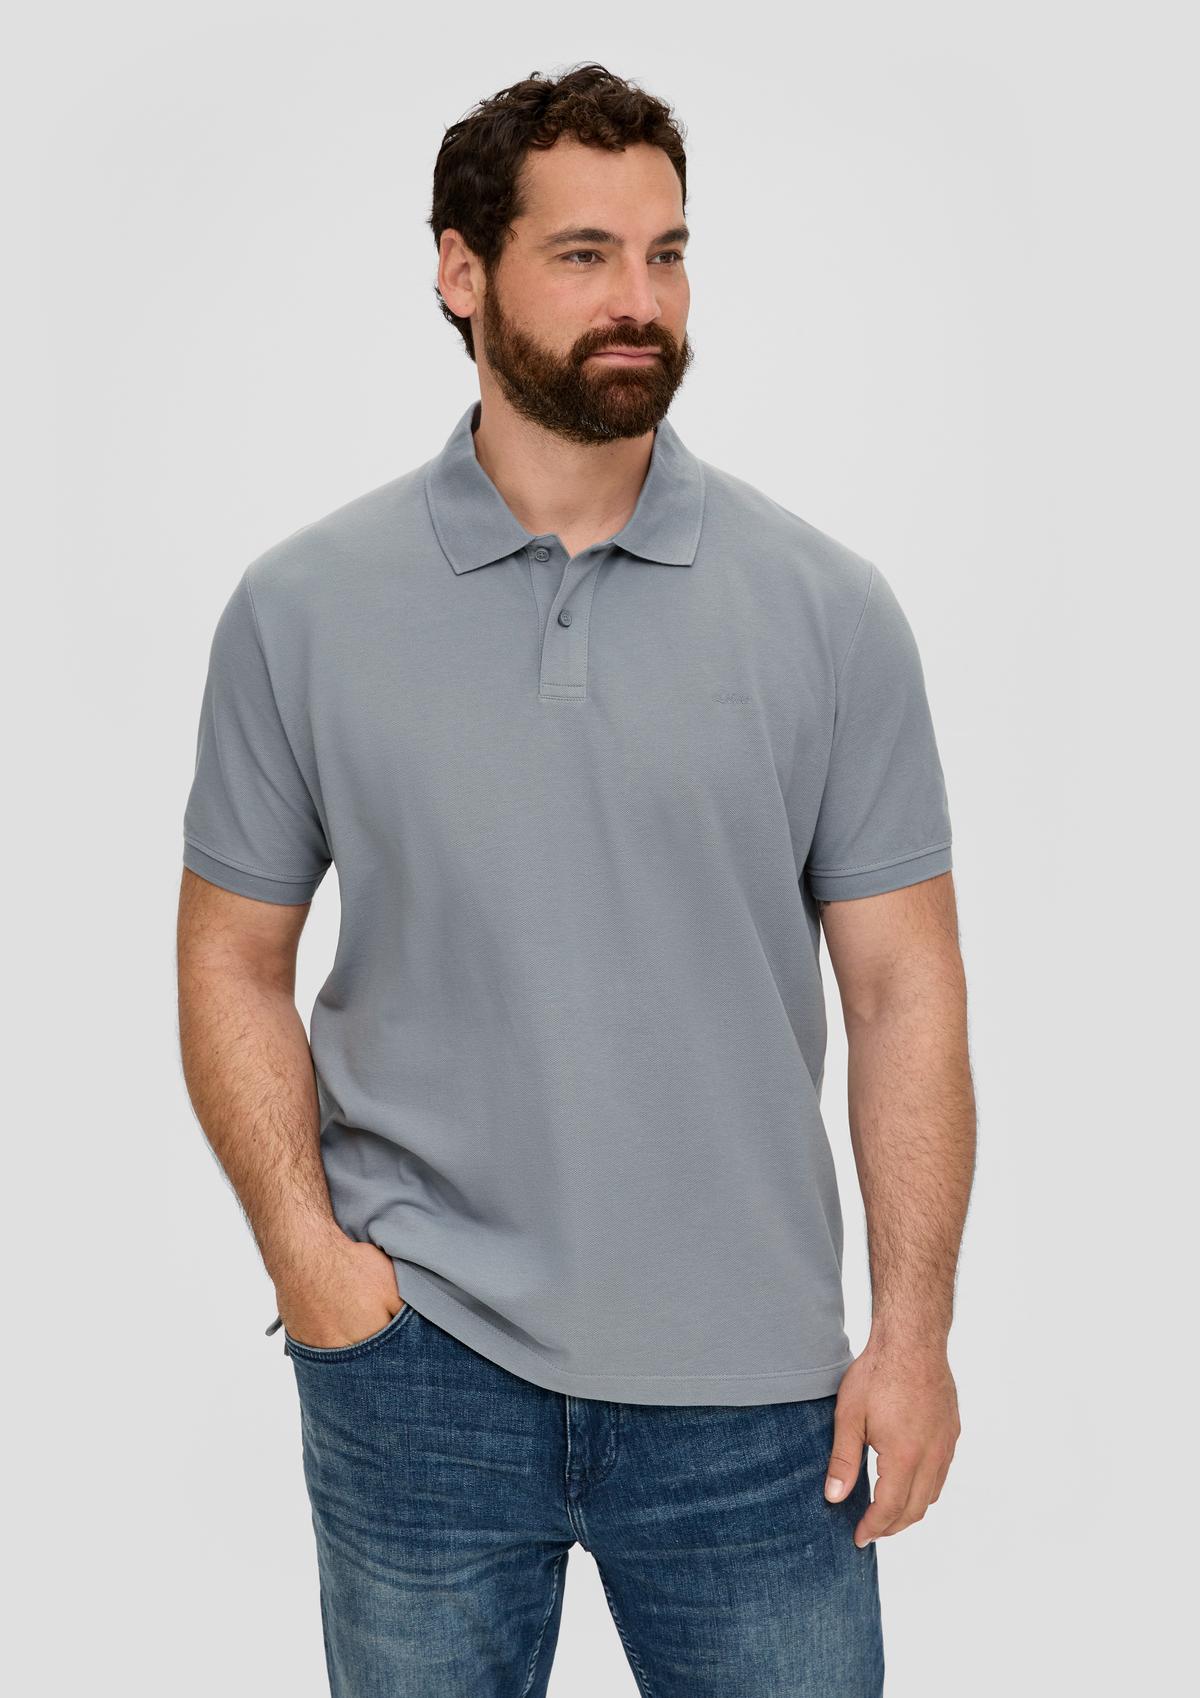 - minimalist Polo print shirt a with navy